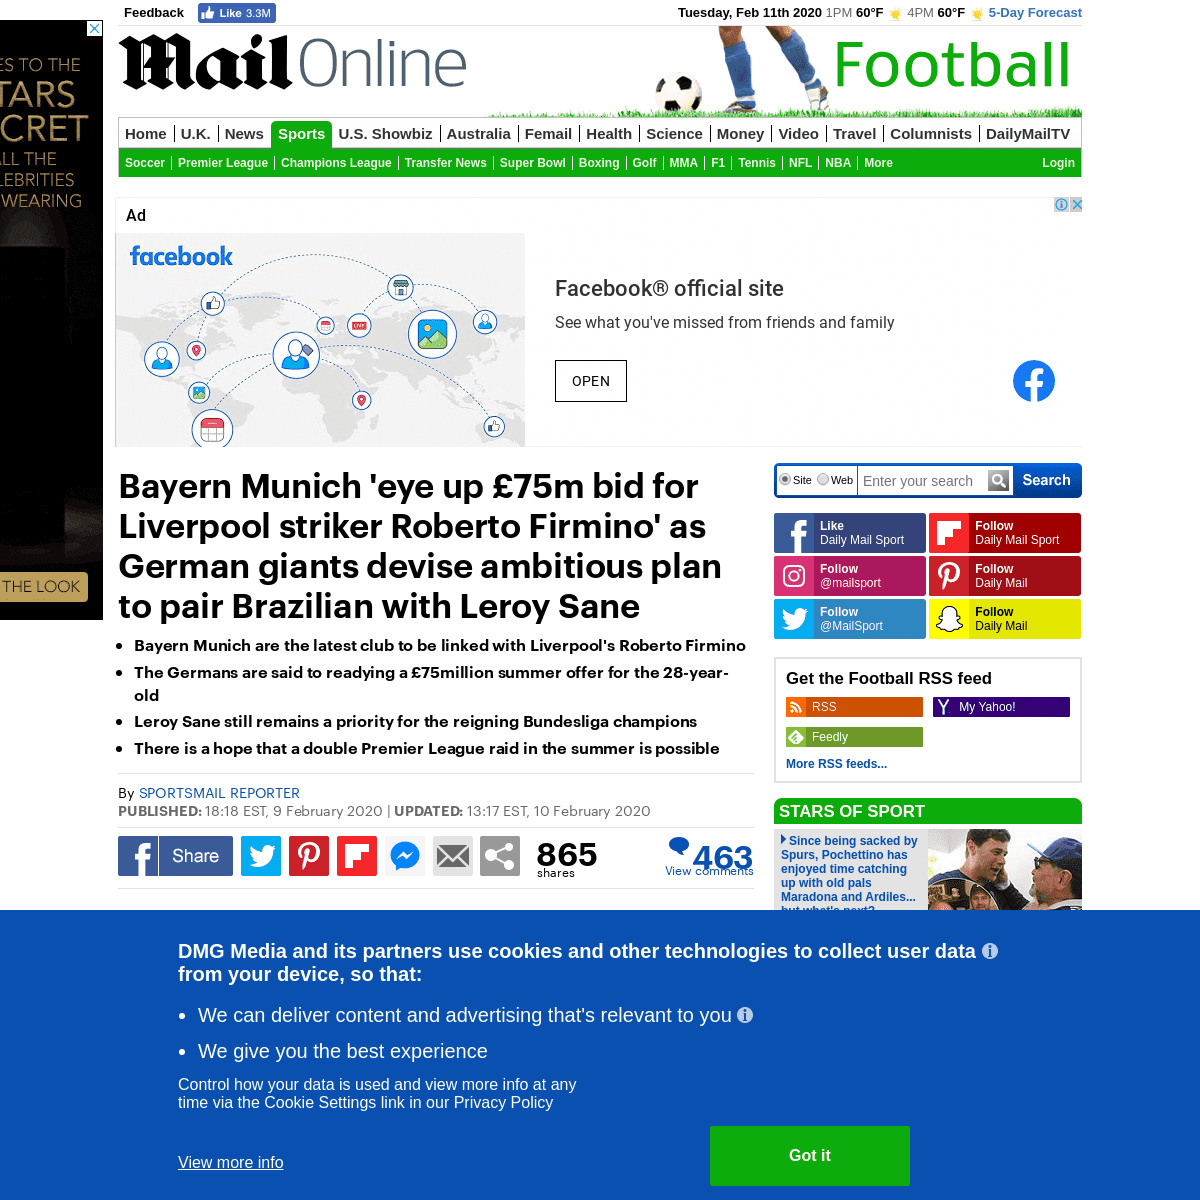 A complete backup of www.dailymail.co.uk/sport/football/article-7985097/Bayern-Munich-eye-75m-bid-Liverpool-striker-Roberto-Firm